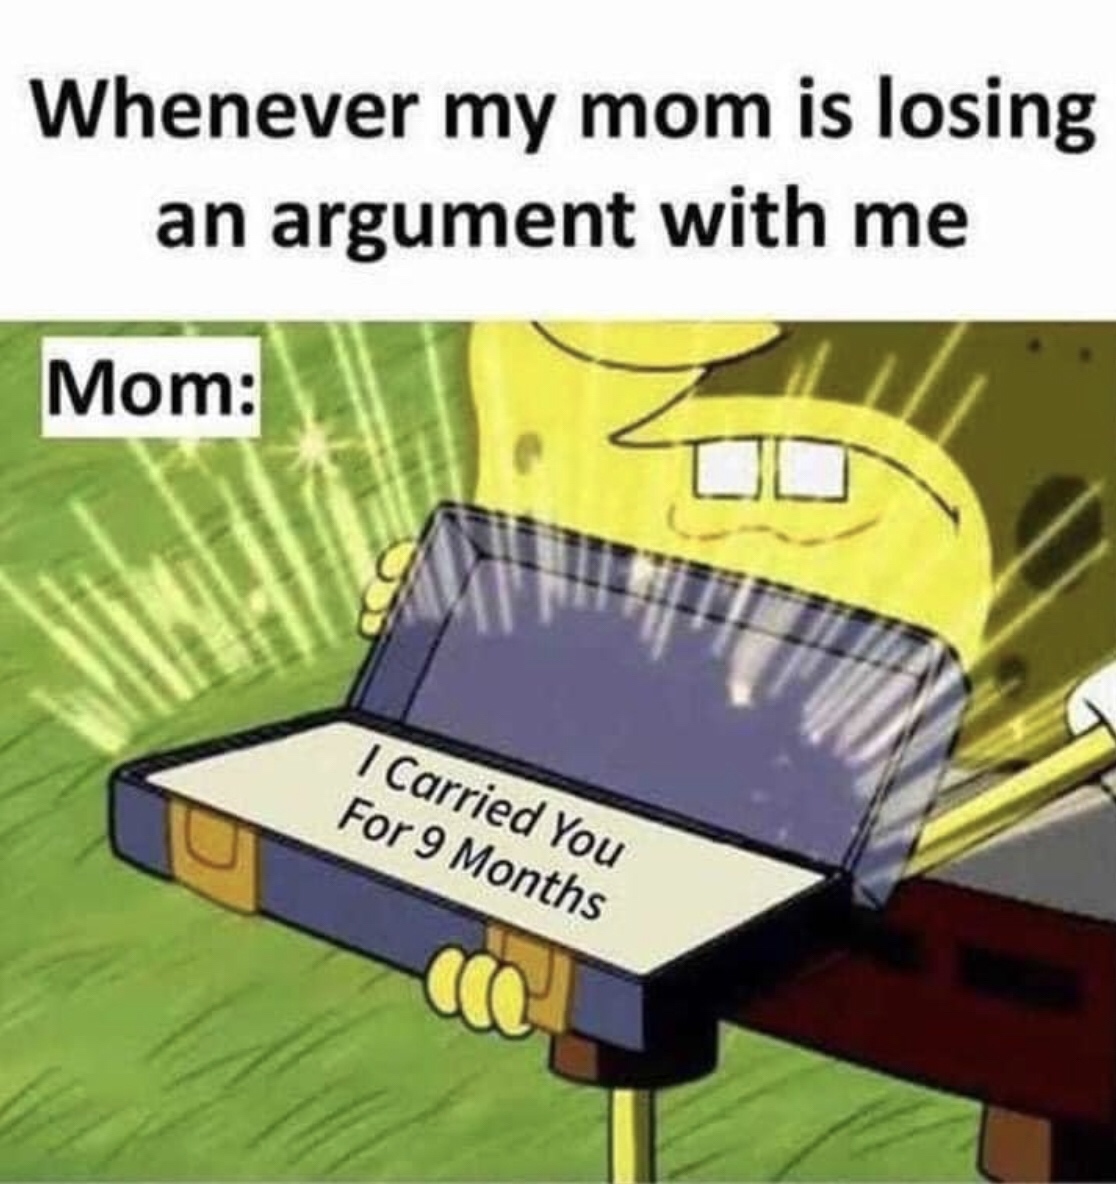 تمبات سبونج بوب - Whenever my mom is losing an argument with me Mom Cd 1 Carried You For 9 Months aca